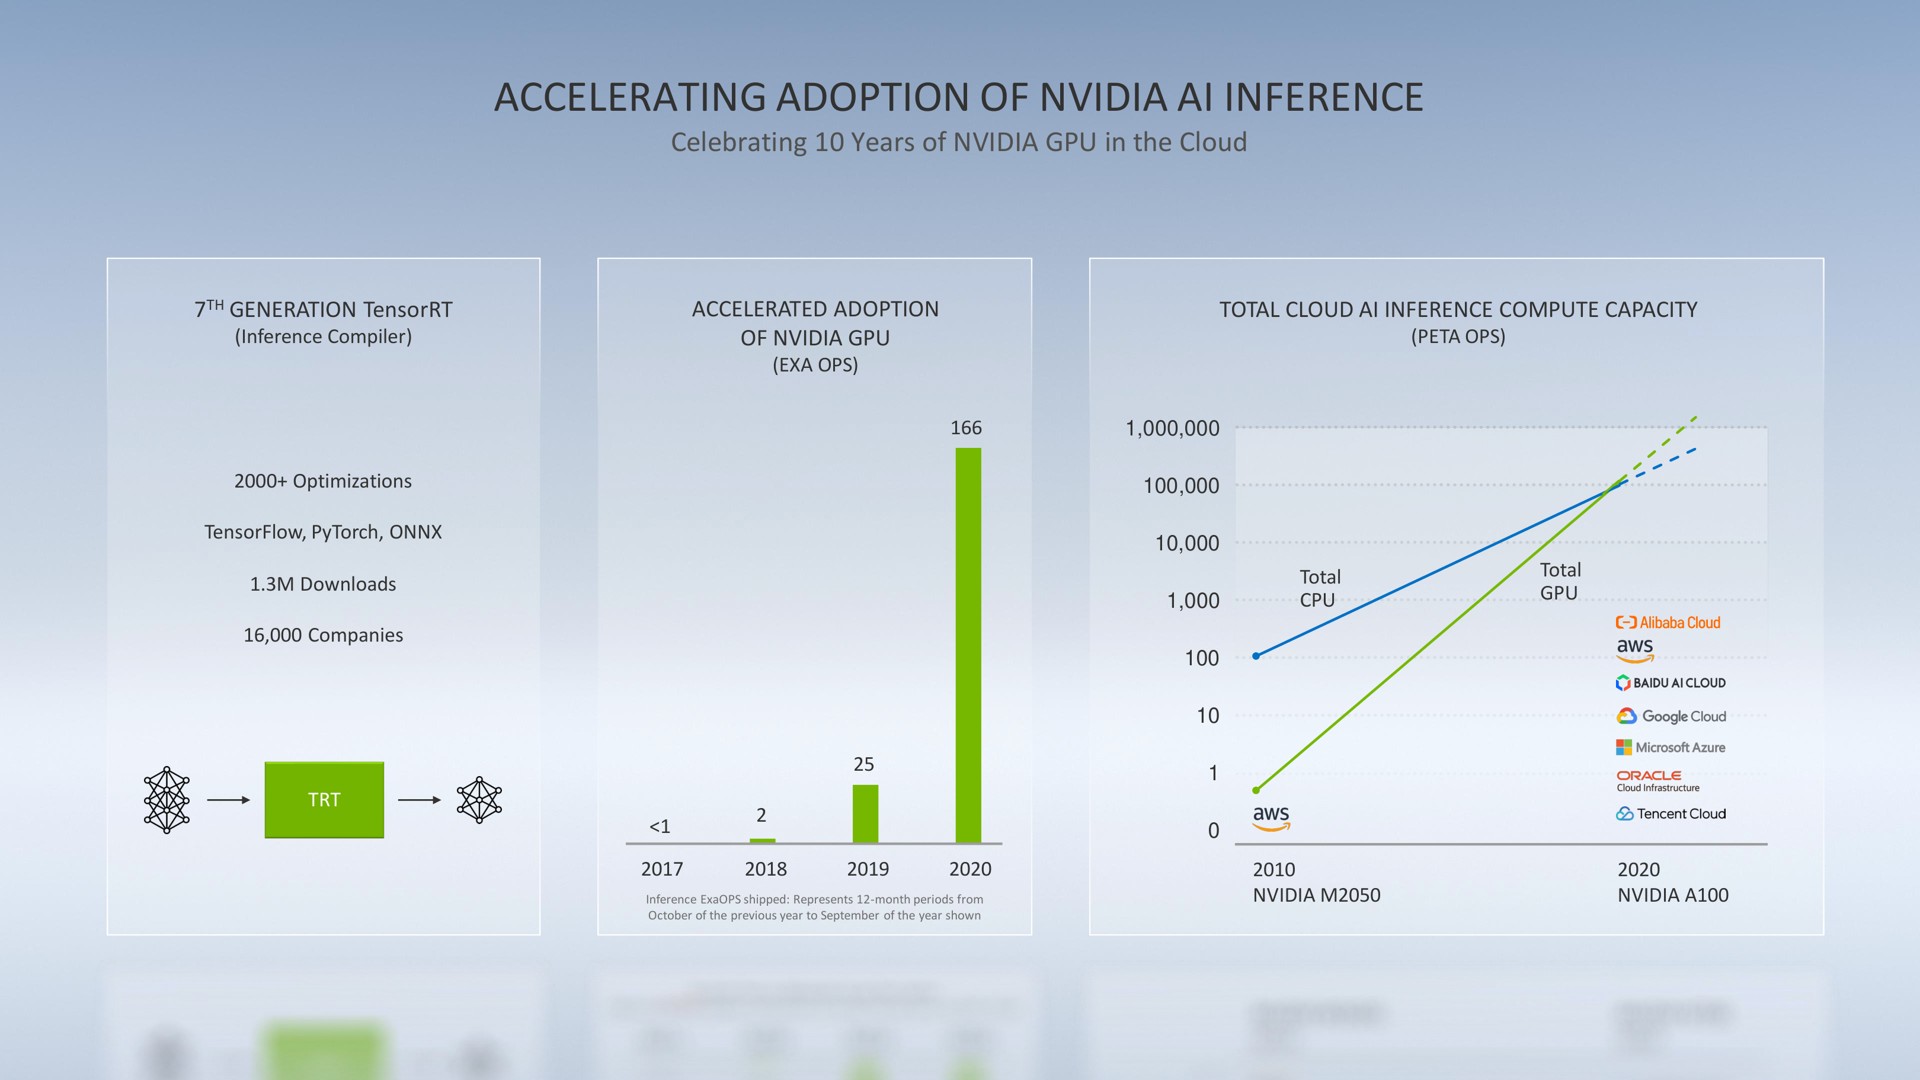 accelerating adoption of inference | NVIDIA